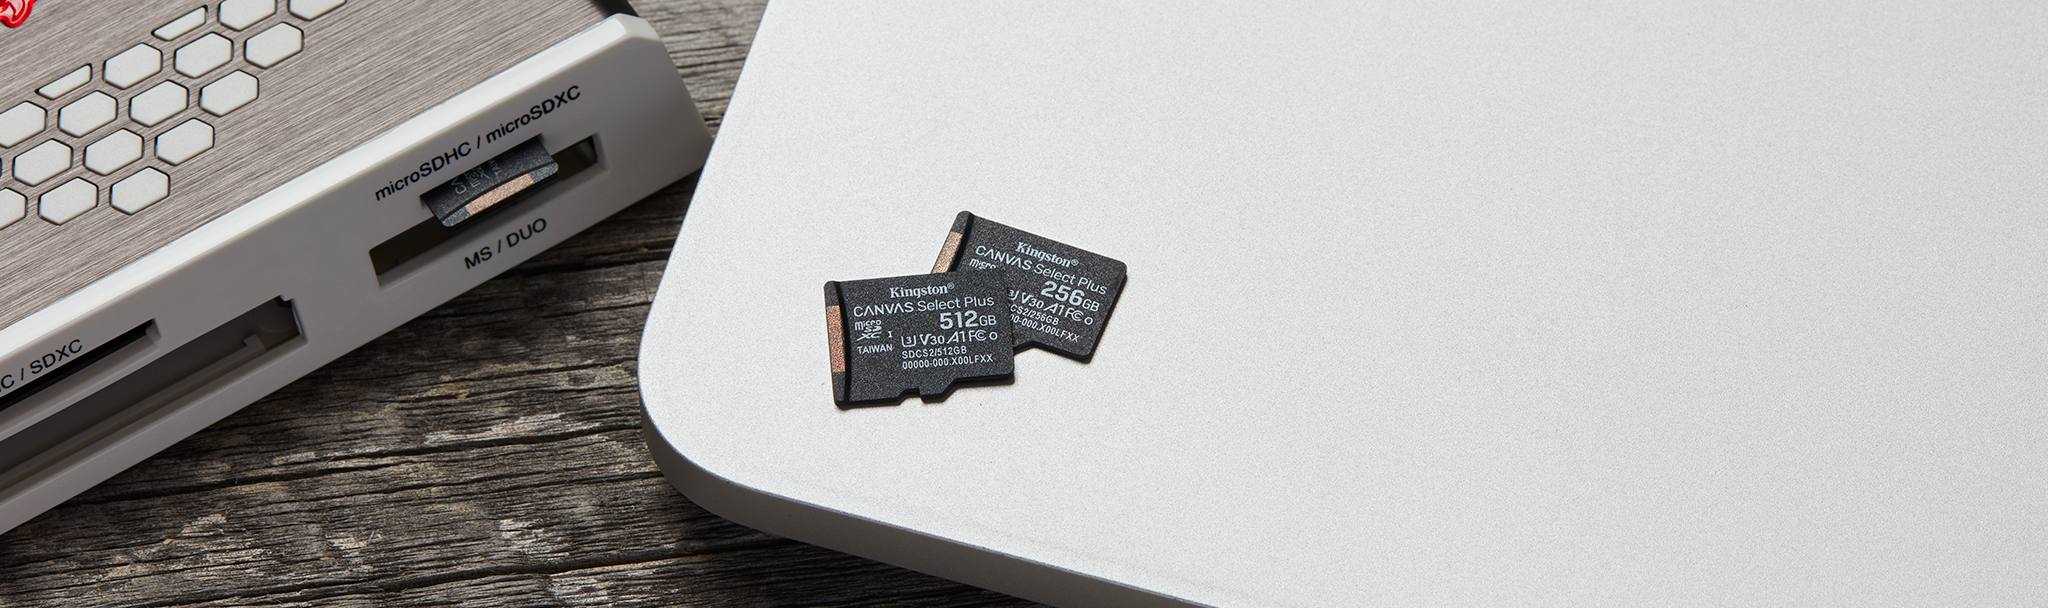 100MBs Works with Kingston Kingston 64GB Samsung SM-J320VZ MicroSDXC Canvas Select Plus Card Verified by SanFlash. 